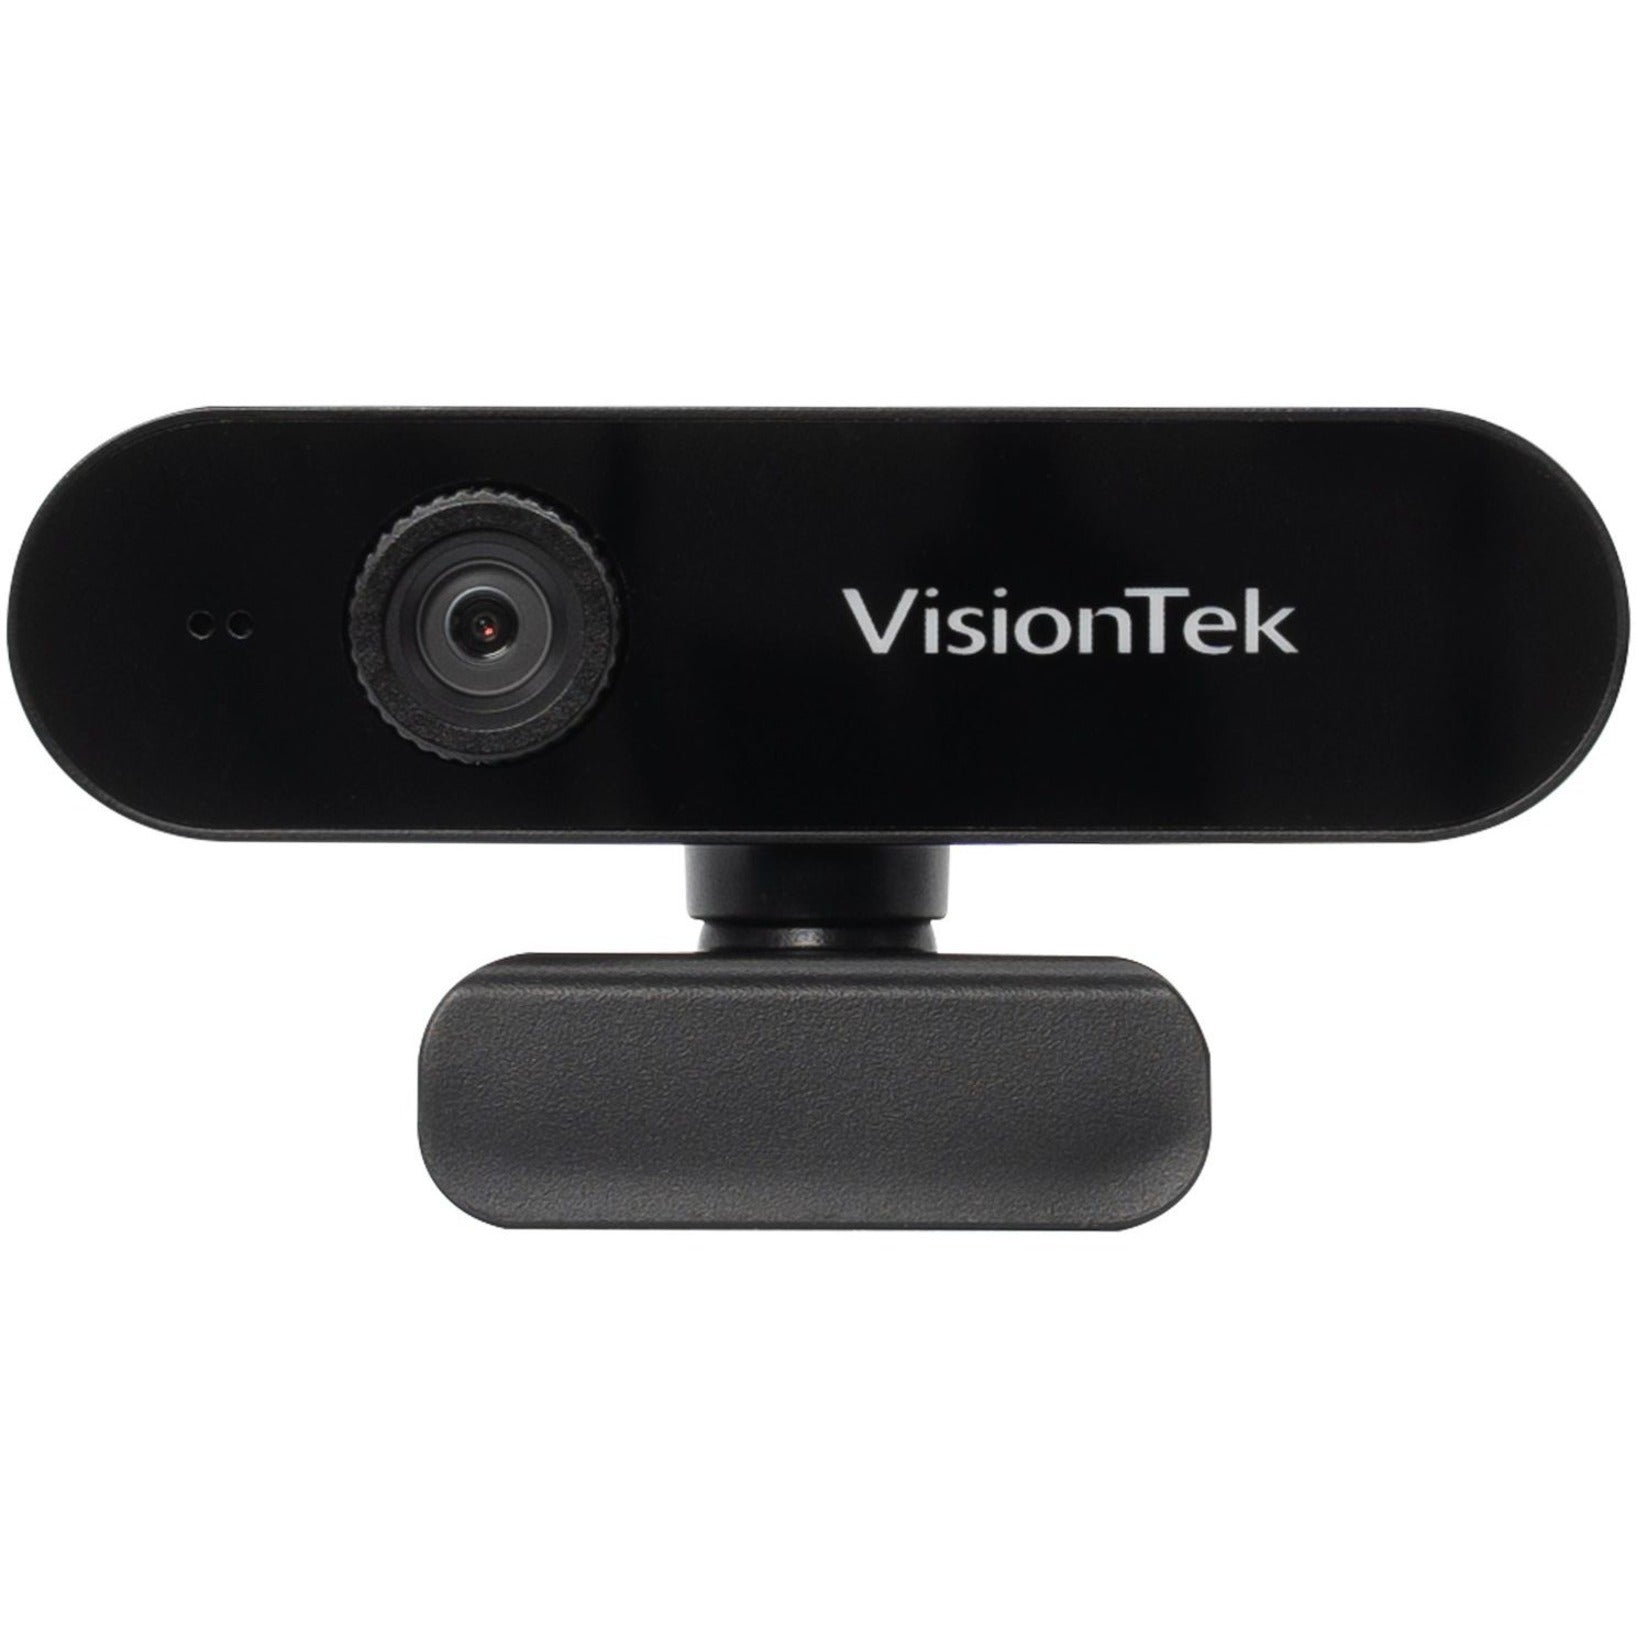 VisionTek 901379 VTWC30 Premium Full HD 1080p Webcam, 30 fps, USB 2.0